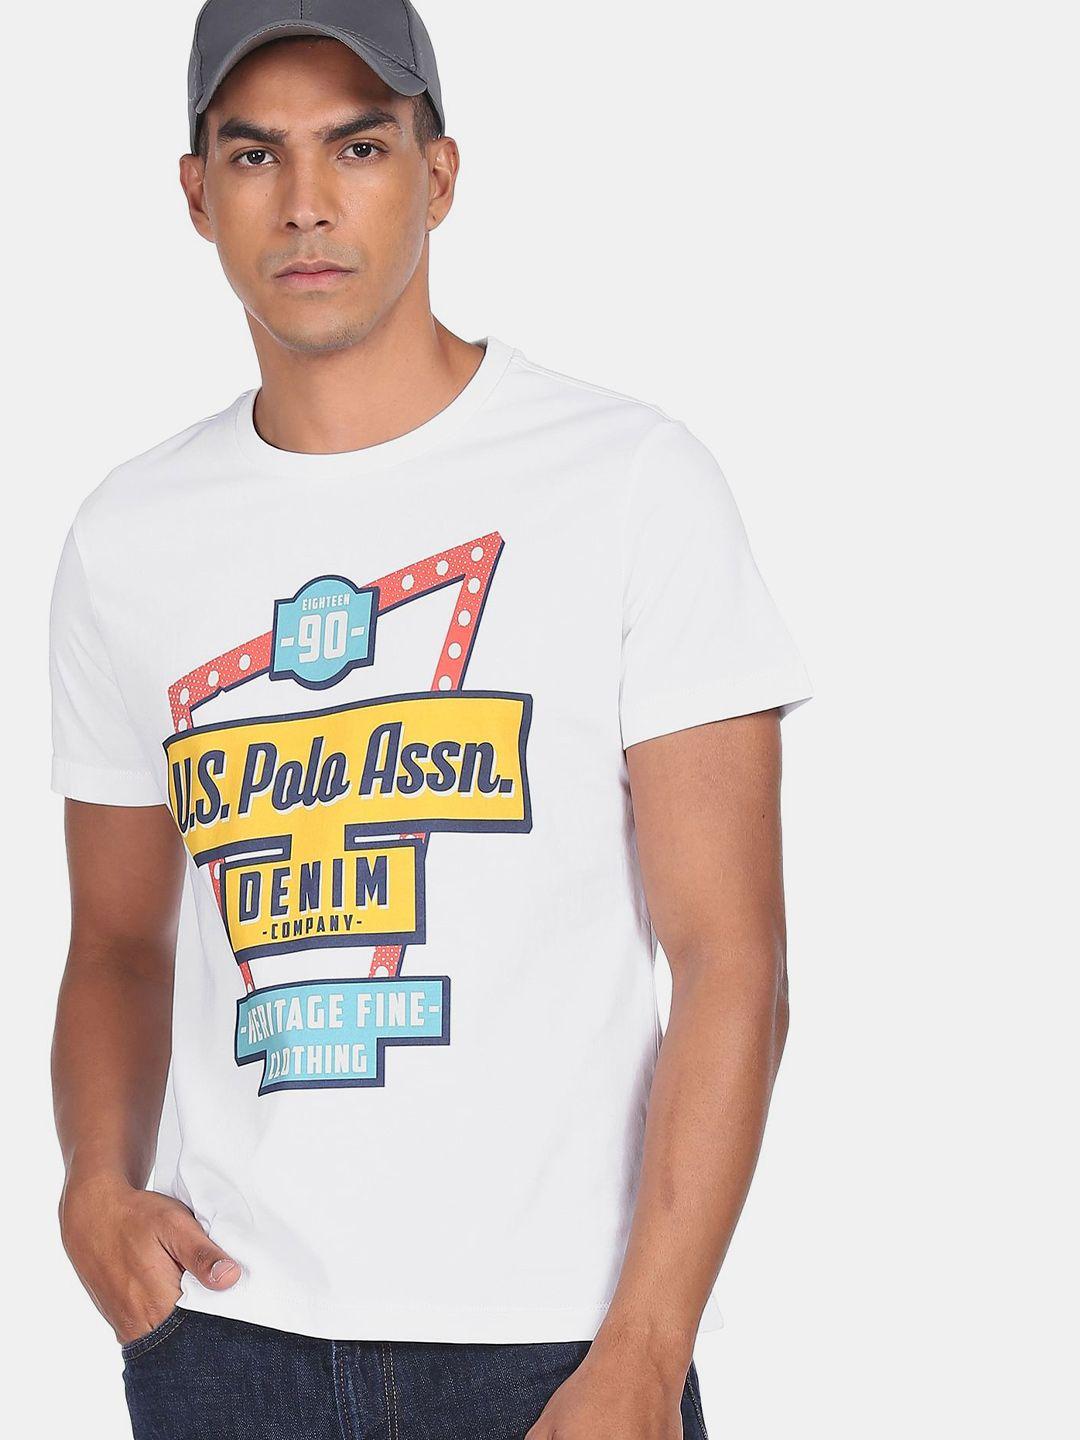 u.s. polo assn. denim co.men white typography printed cotton t-shirt